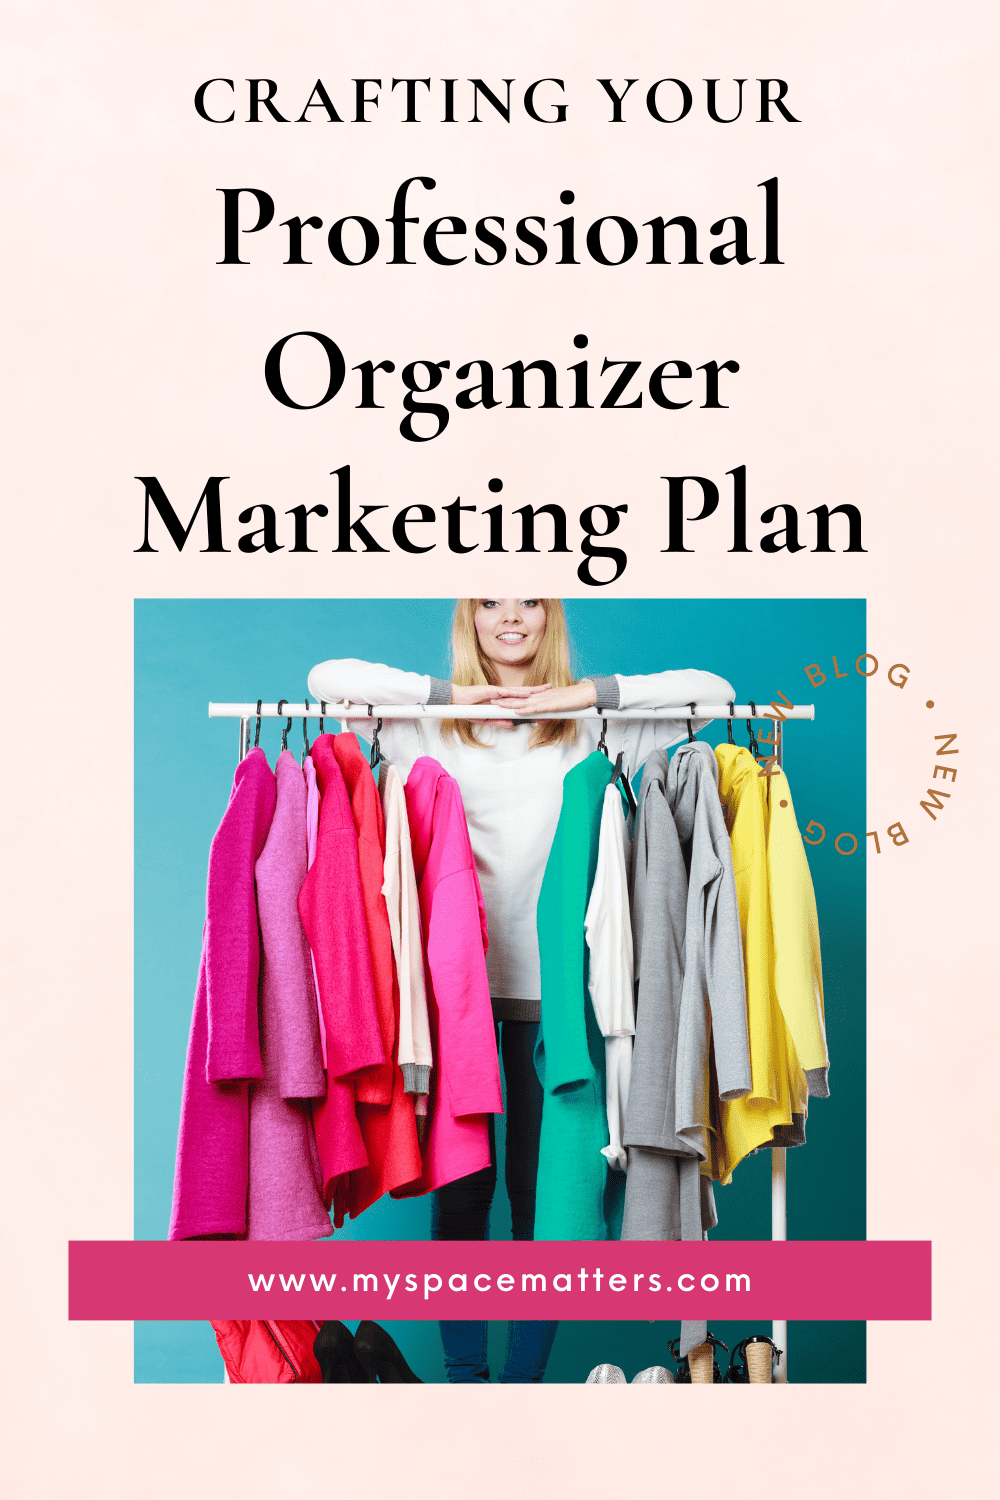 pro organizers marketing plan<br>
